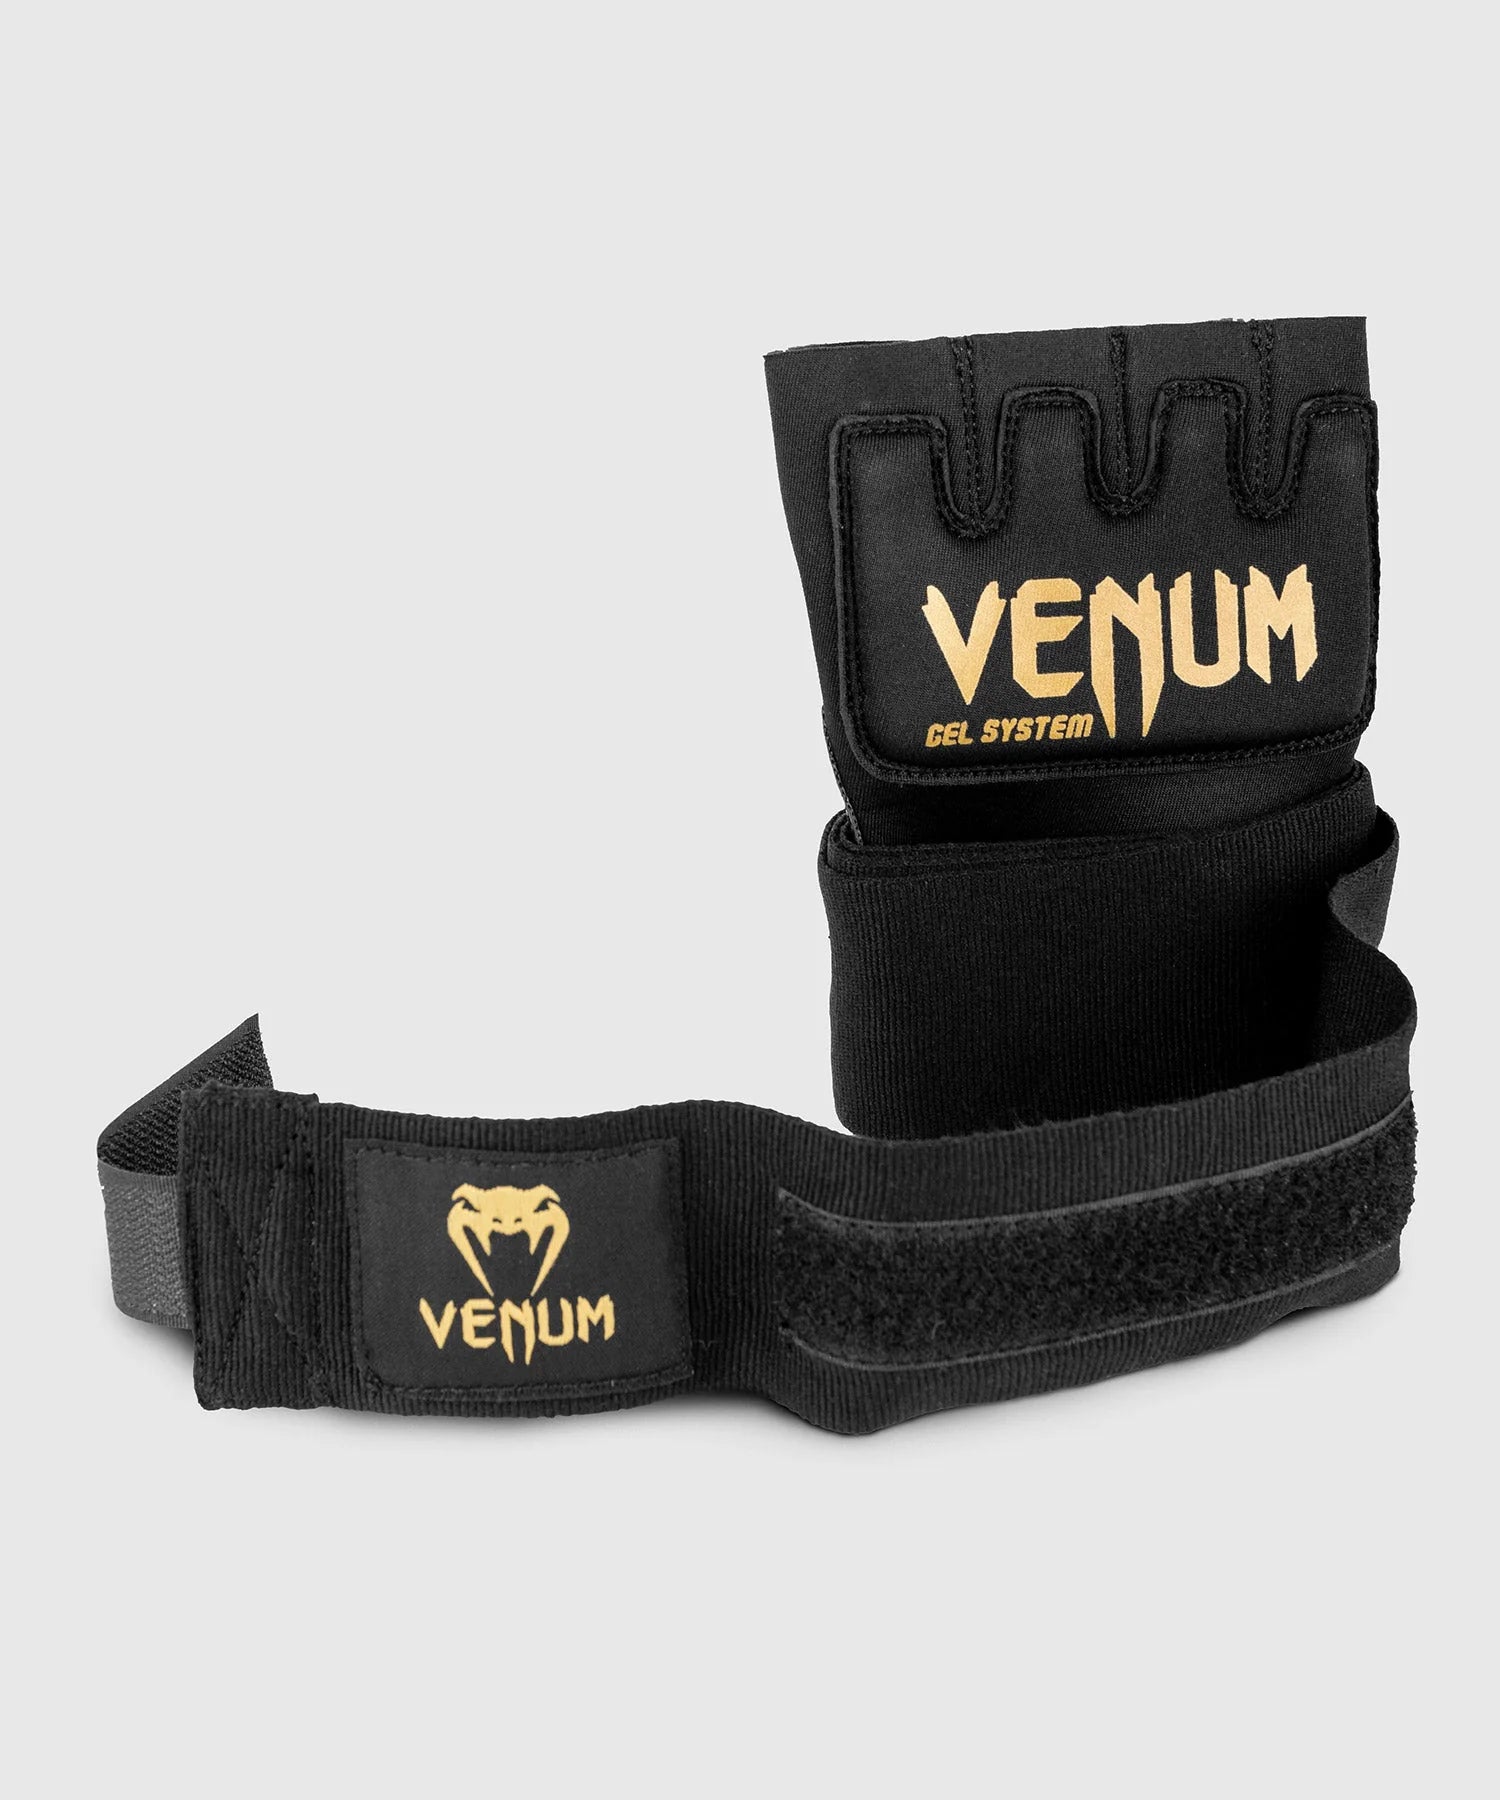 Kontact Gel Glove Wraps - Venum